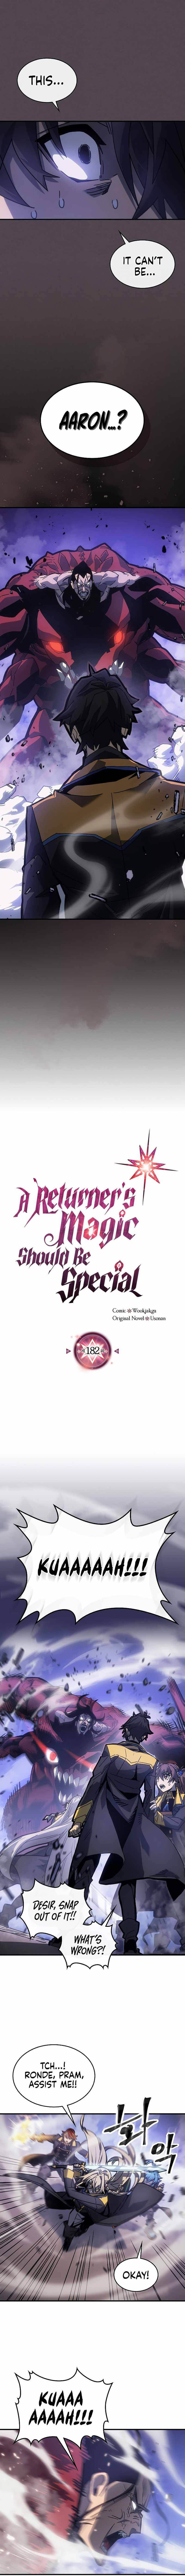 a_returners_magic_should_be_special_182_1